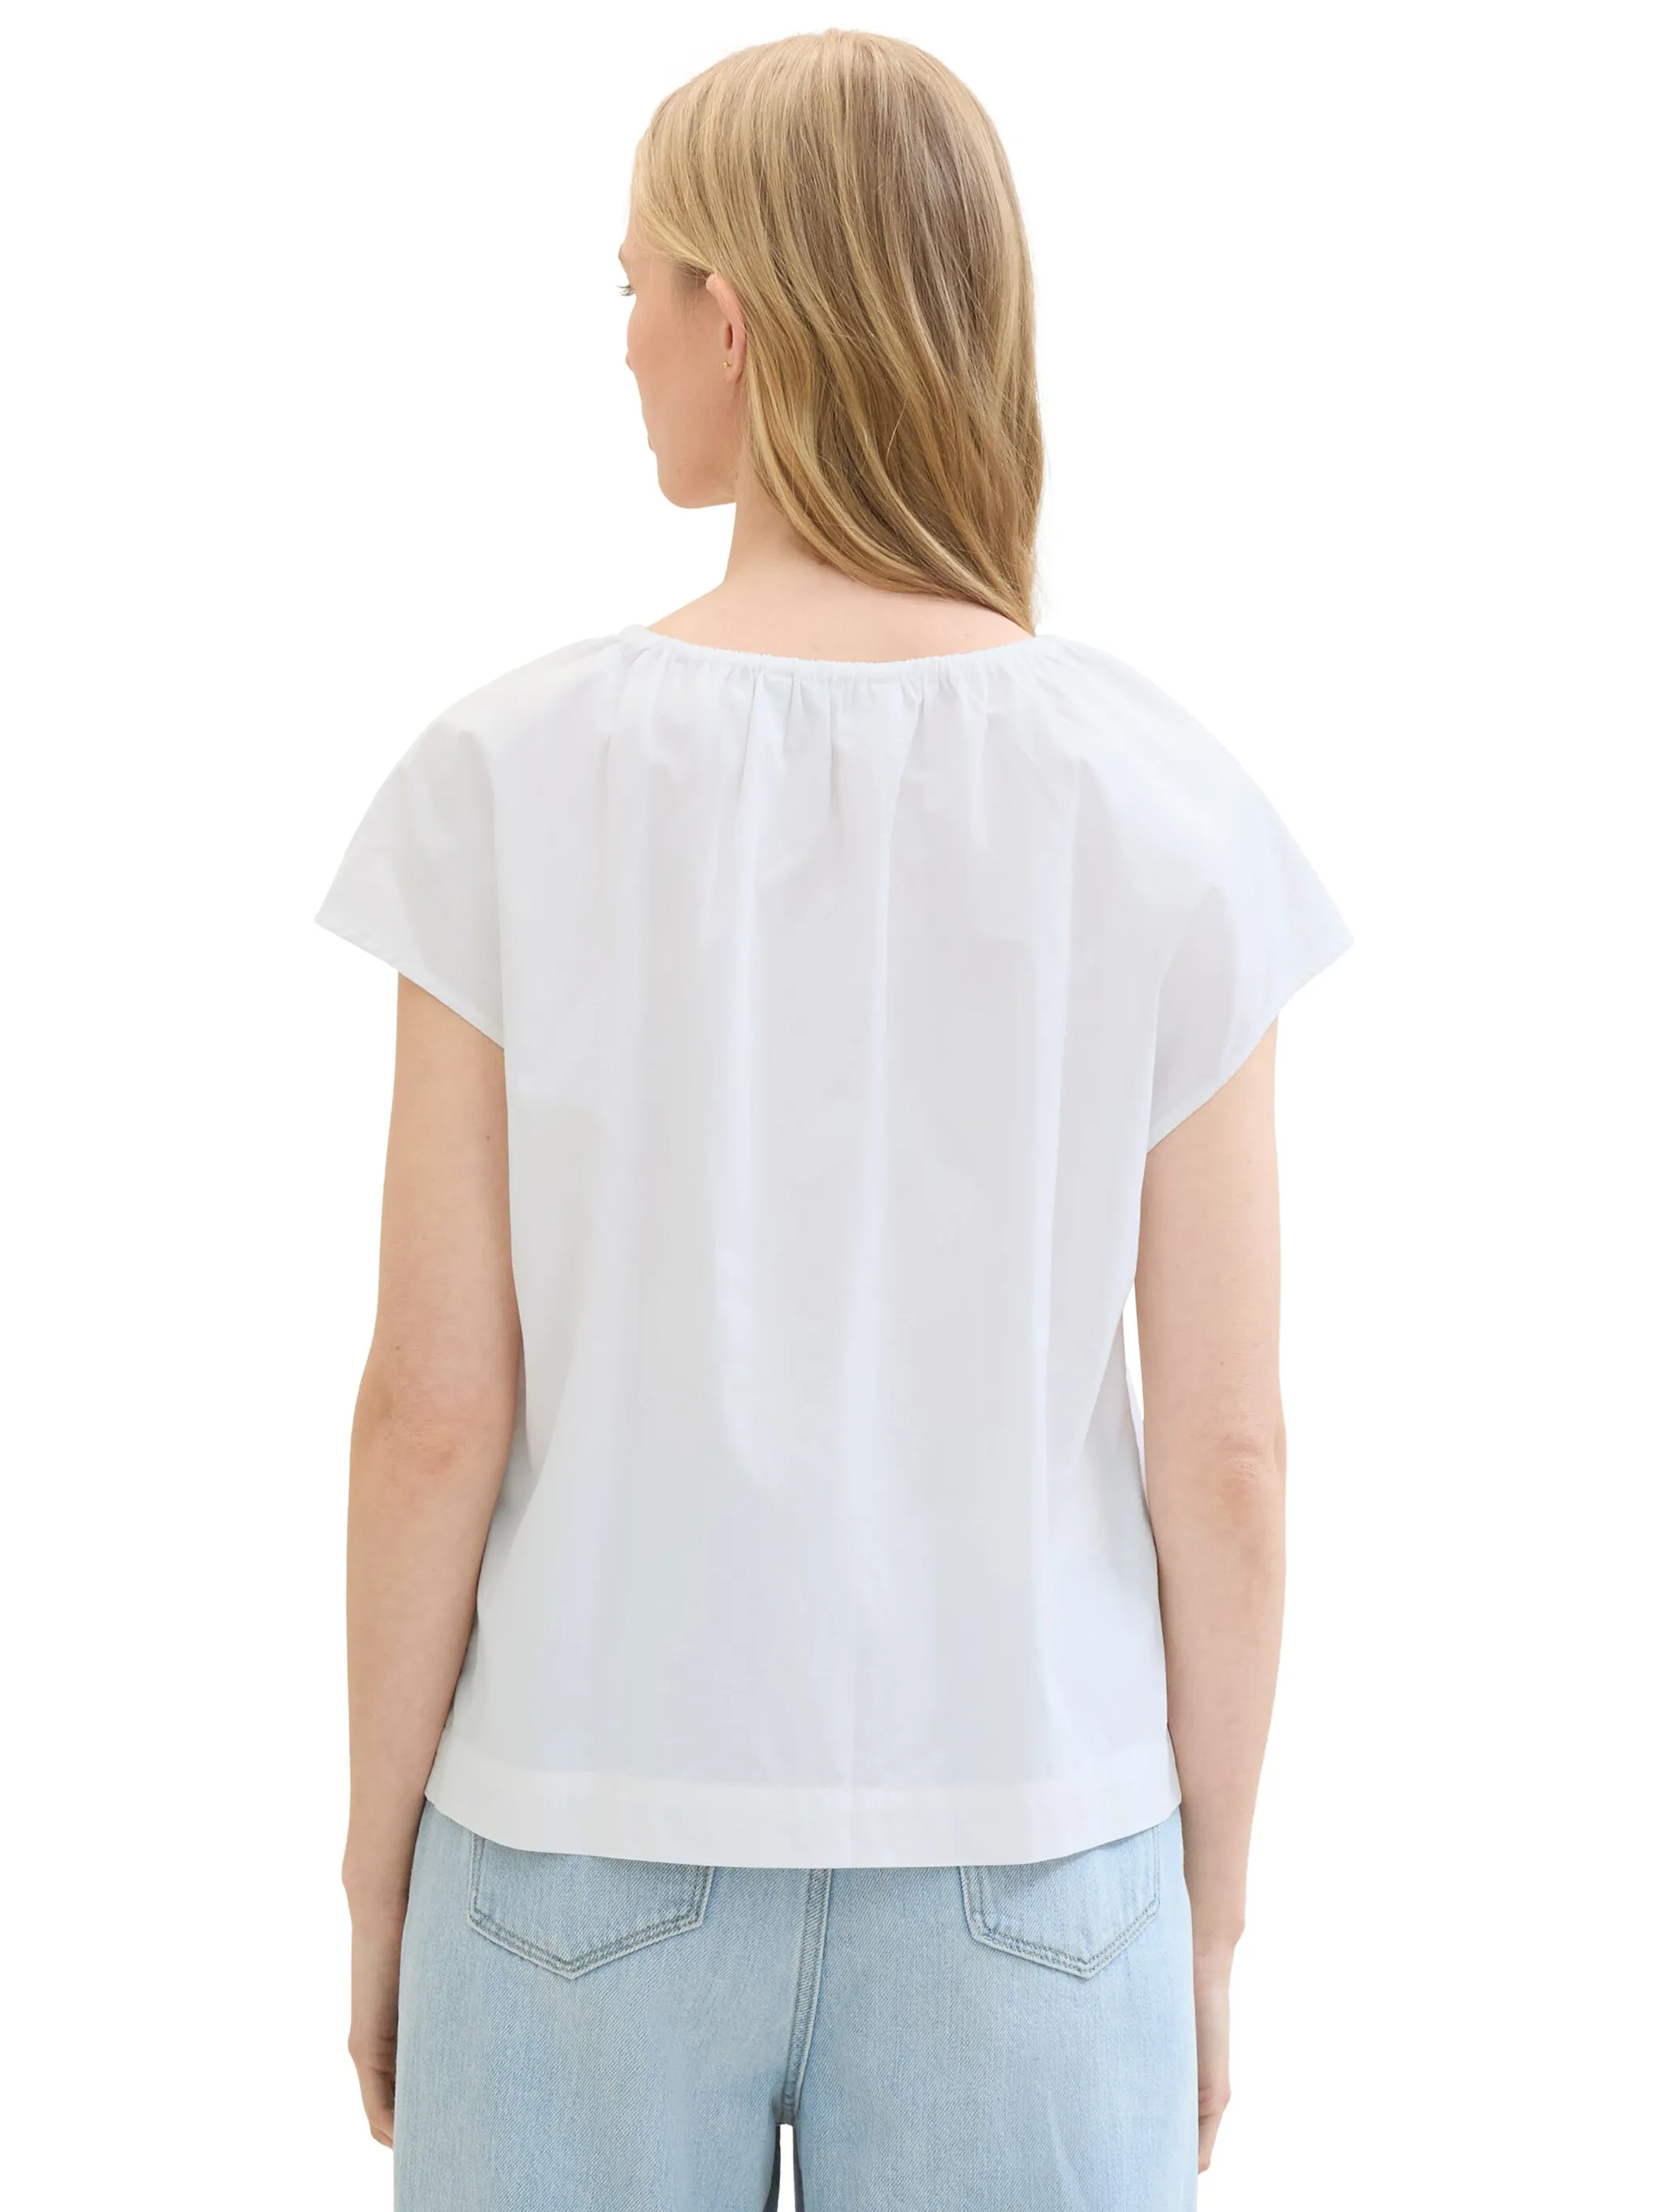 Tom Tailor 1040322 feminine solid blouse Weiß 890603 20000 2